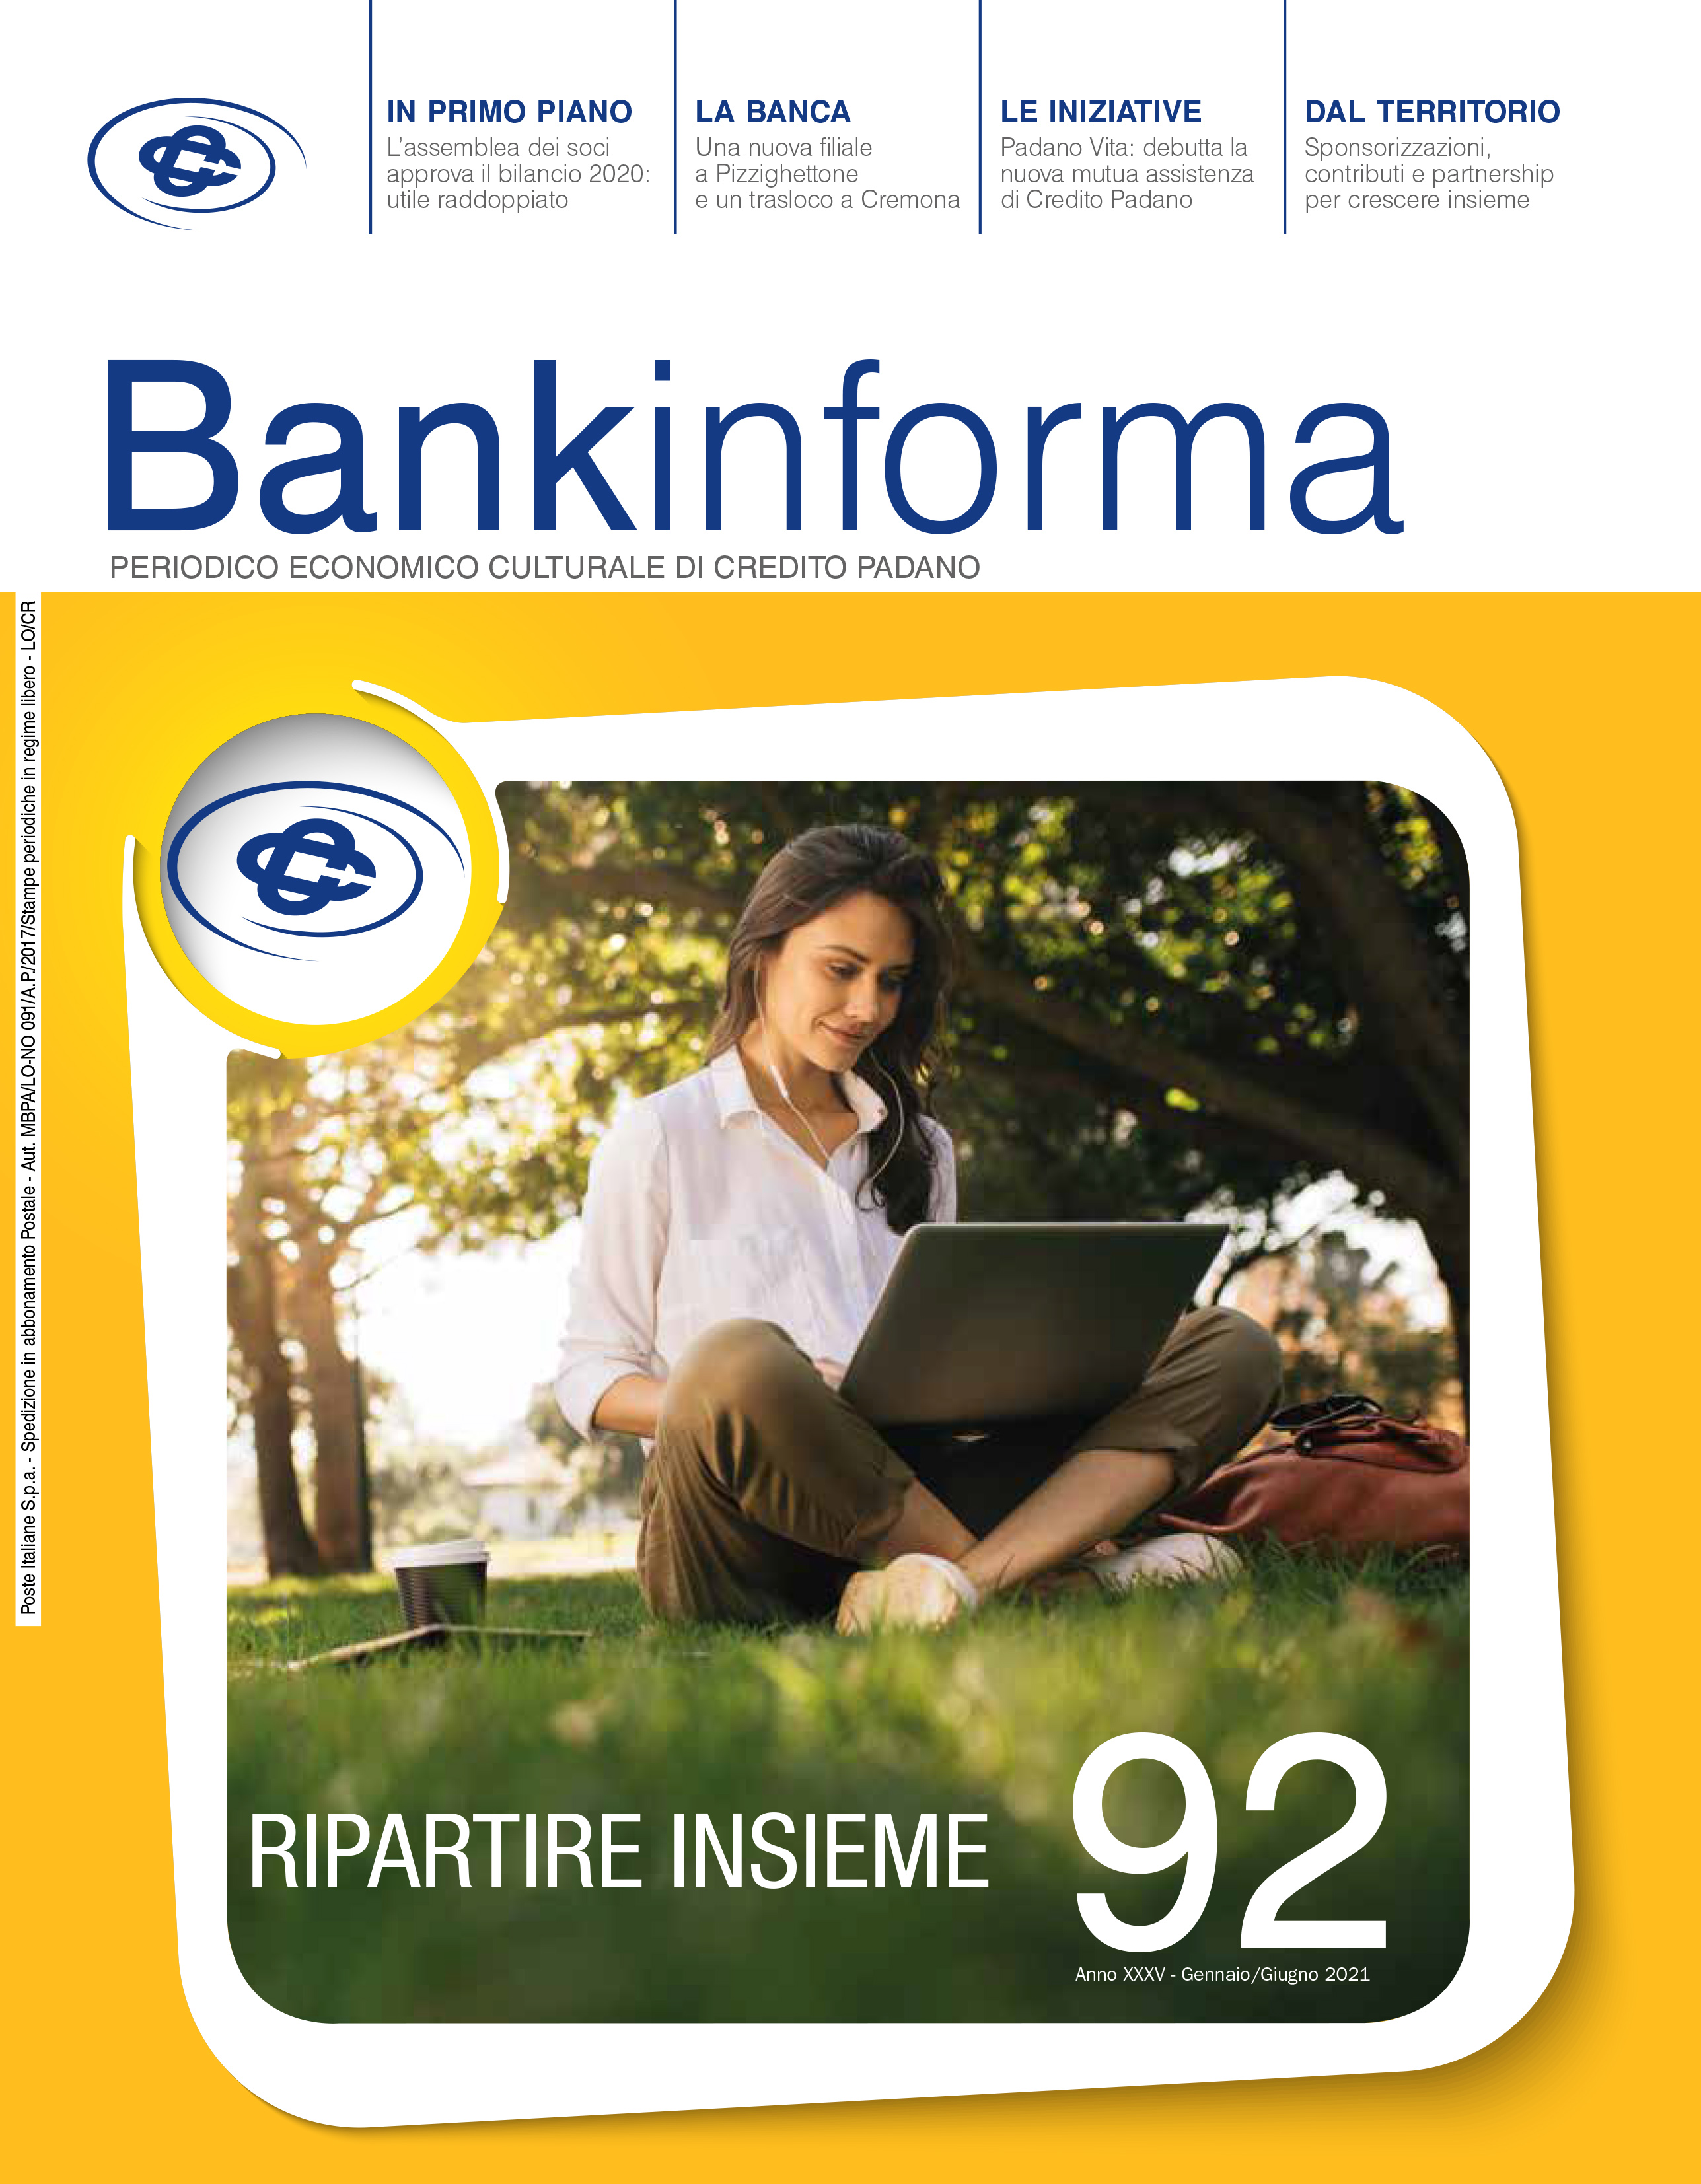 Bankinforma nr. 92 - copertina